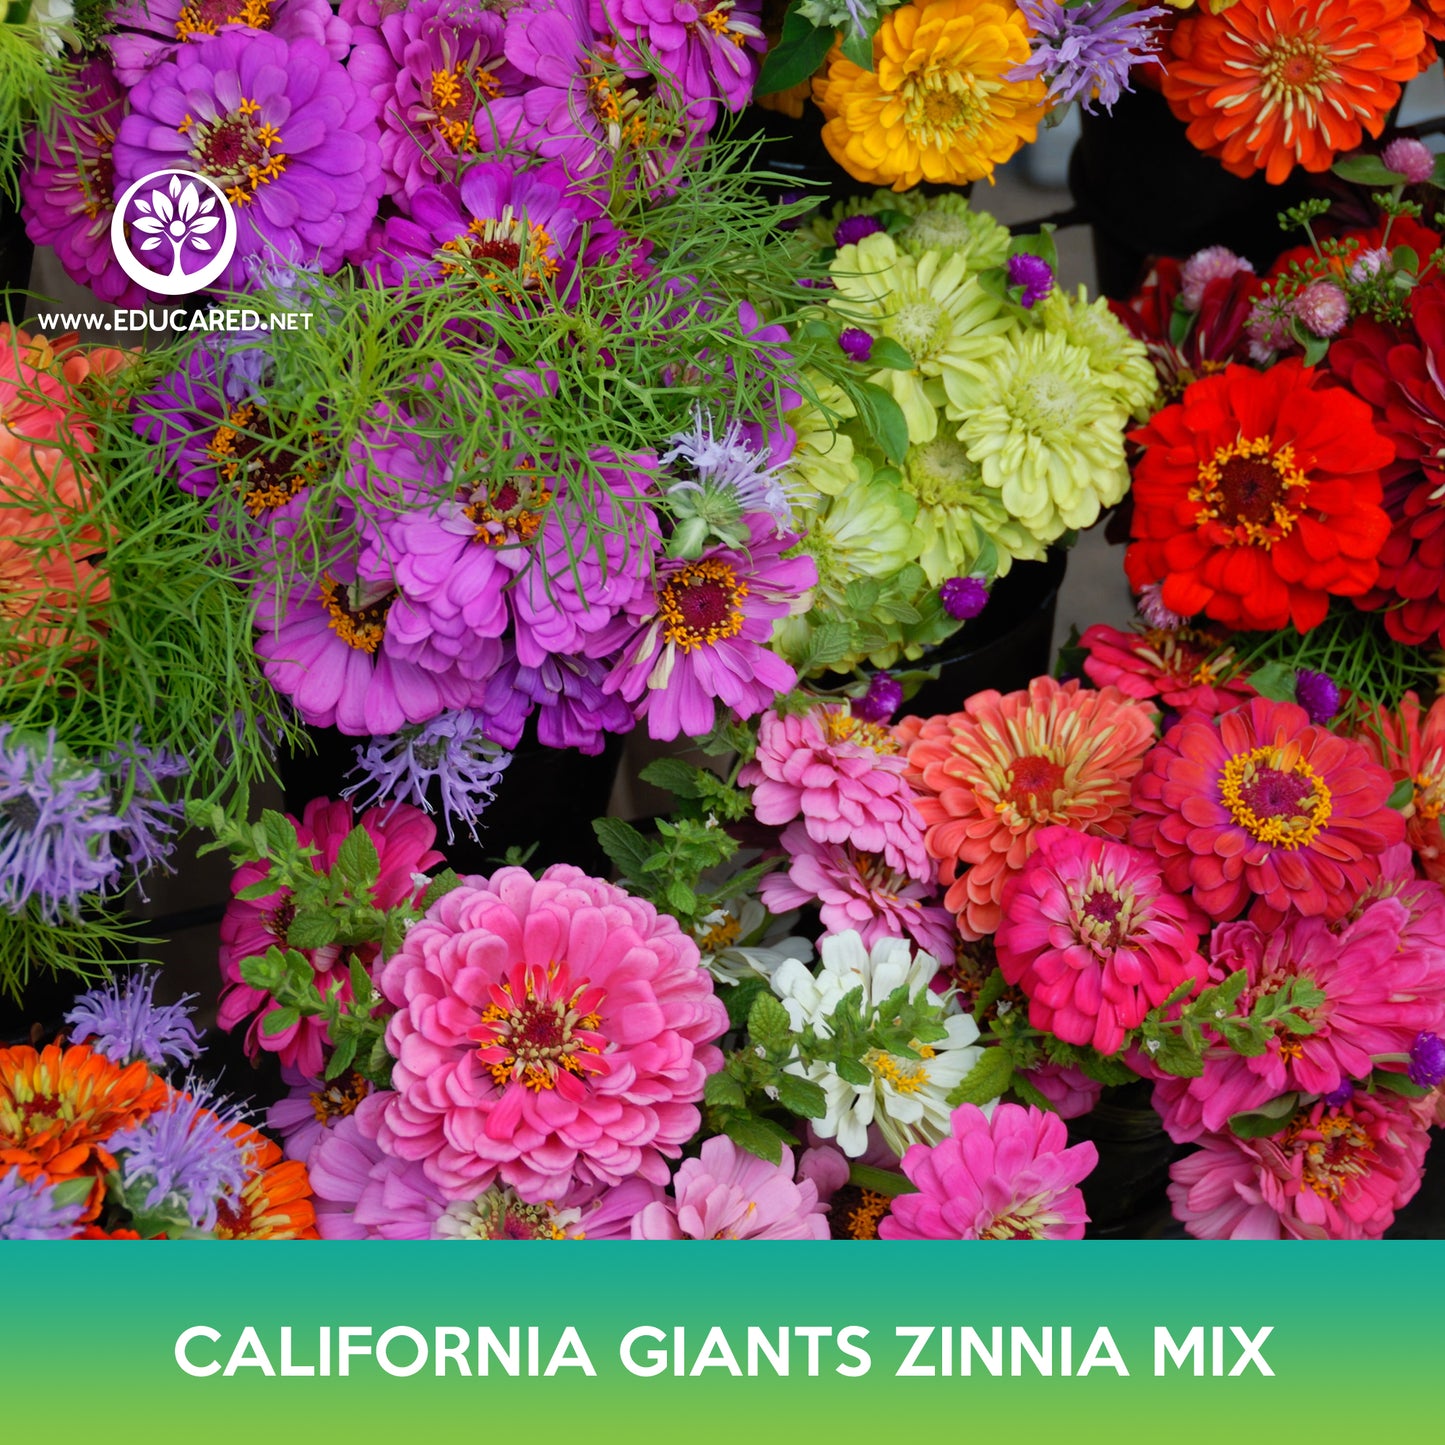 California Giants Zinnia Mix Seed, Zinnia elegans